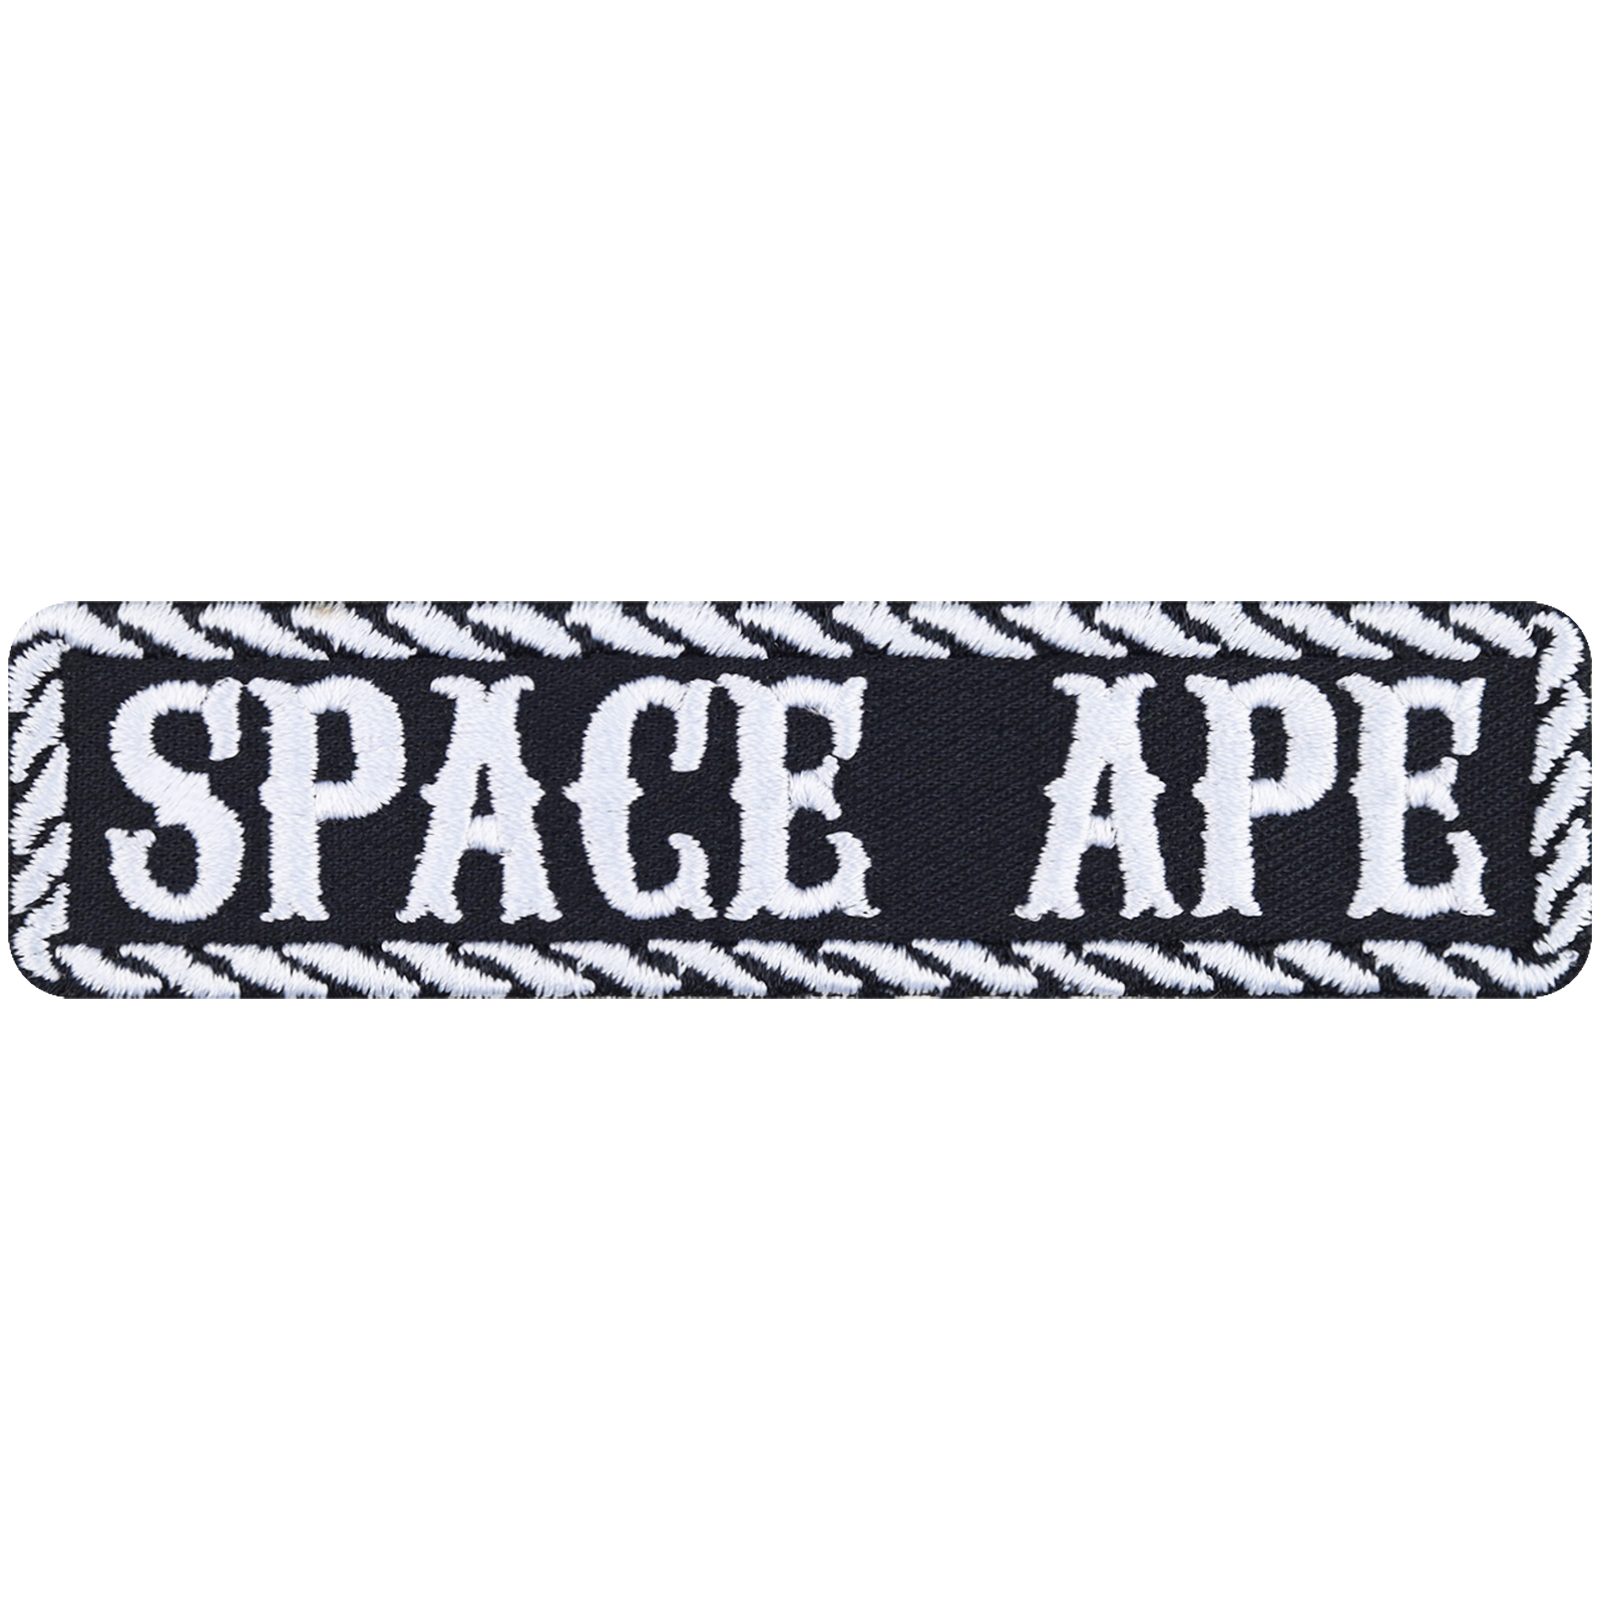 Space ape - Patch